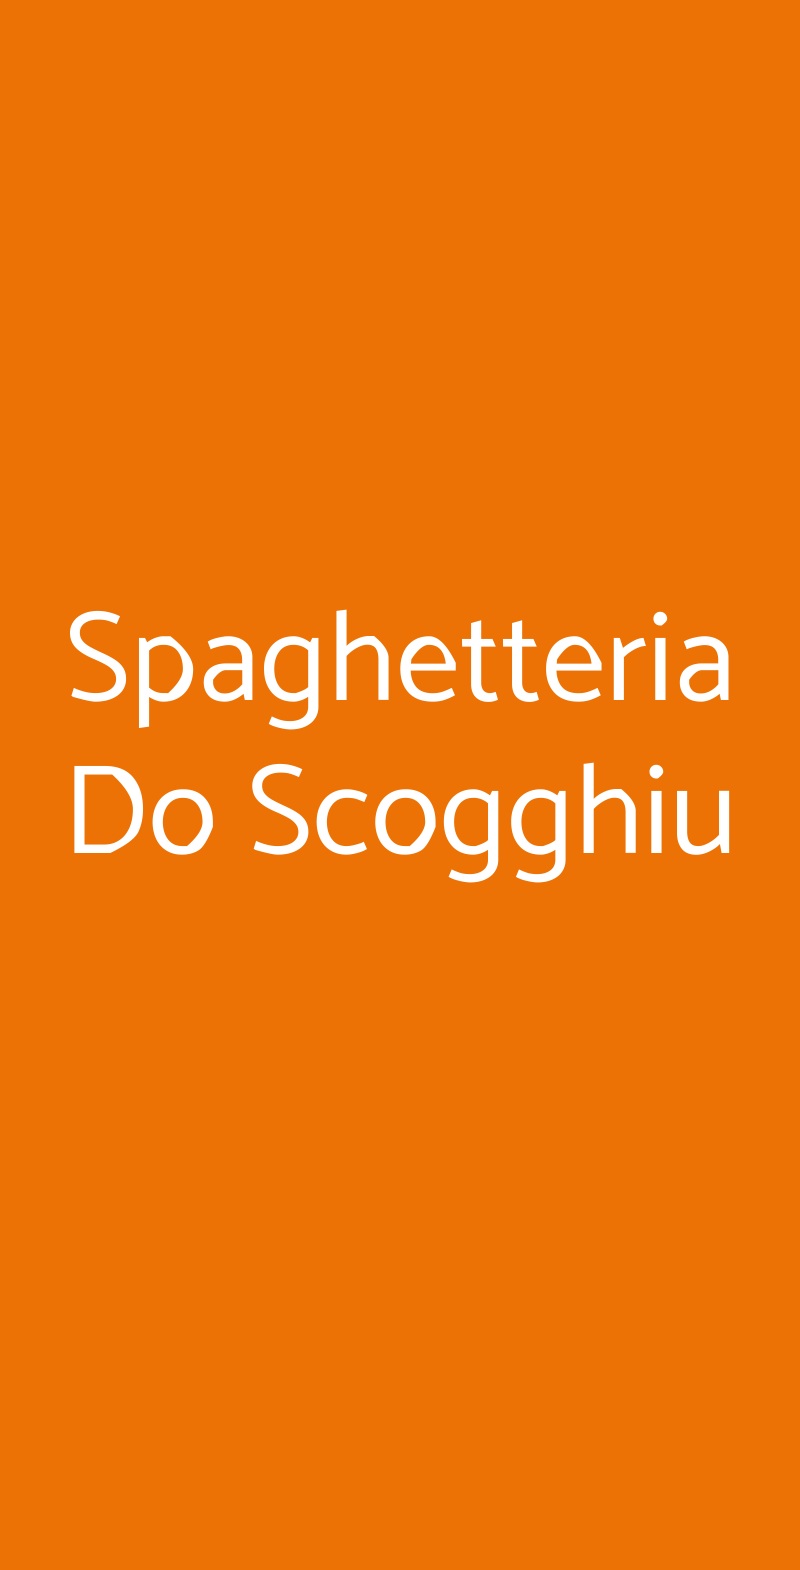 Spaghetteria Do Scogghiu Siracusa menù 1 pagina